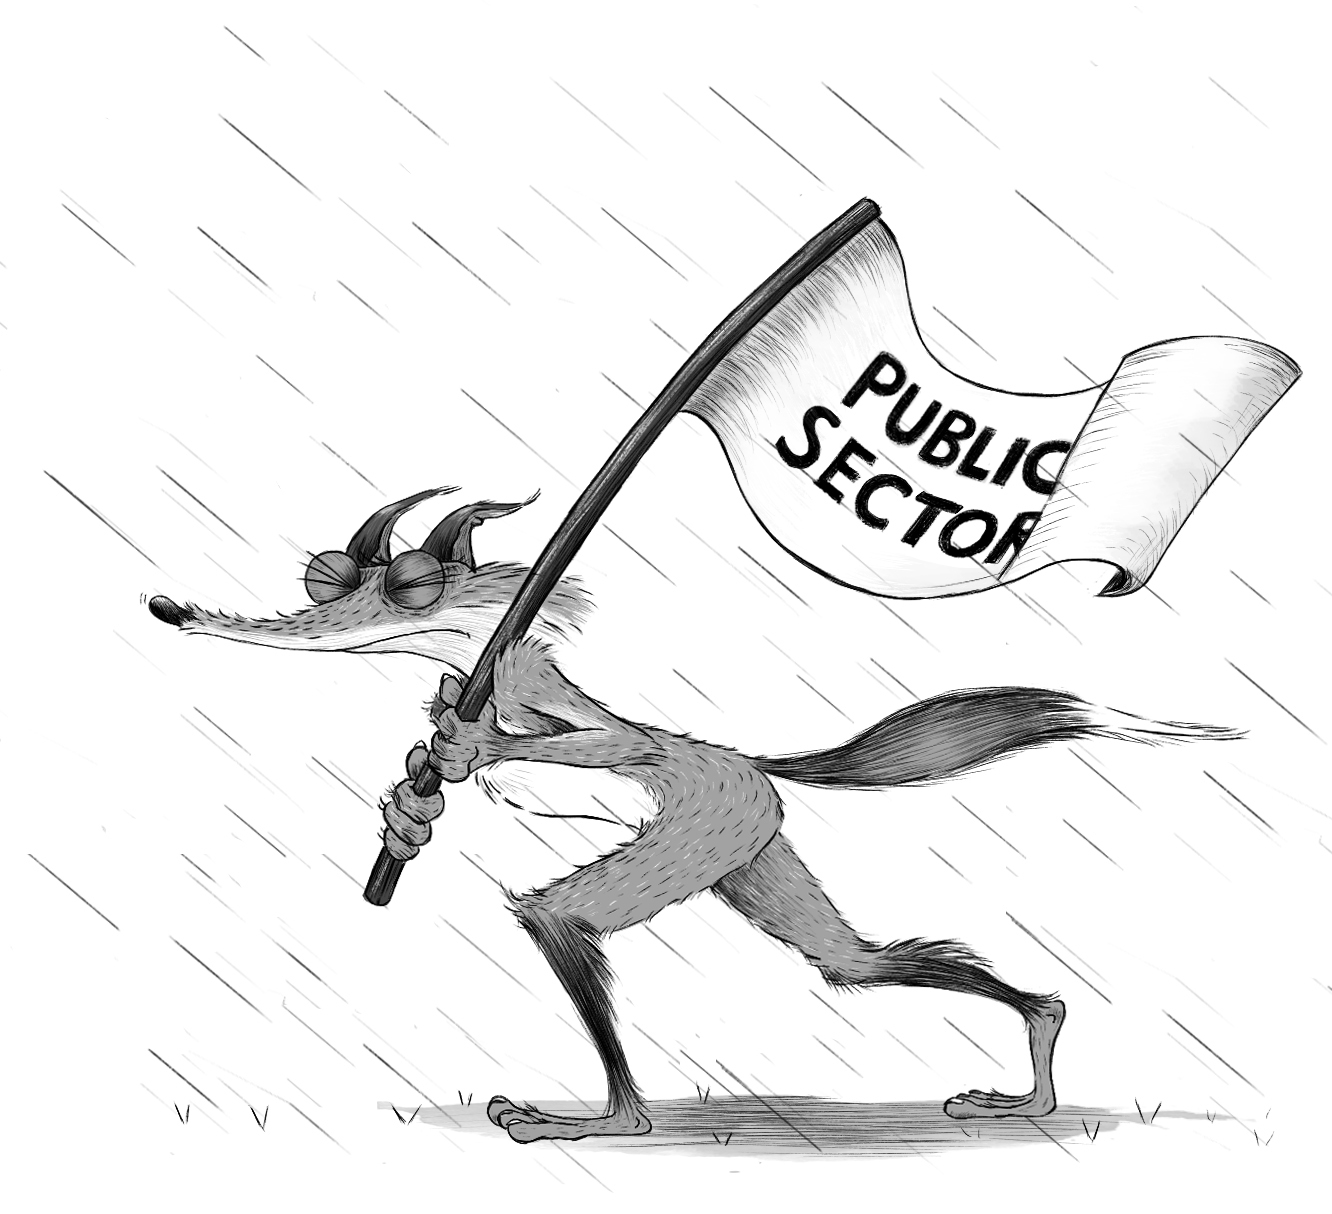 Public sector fox